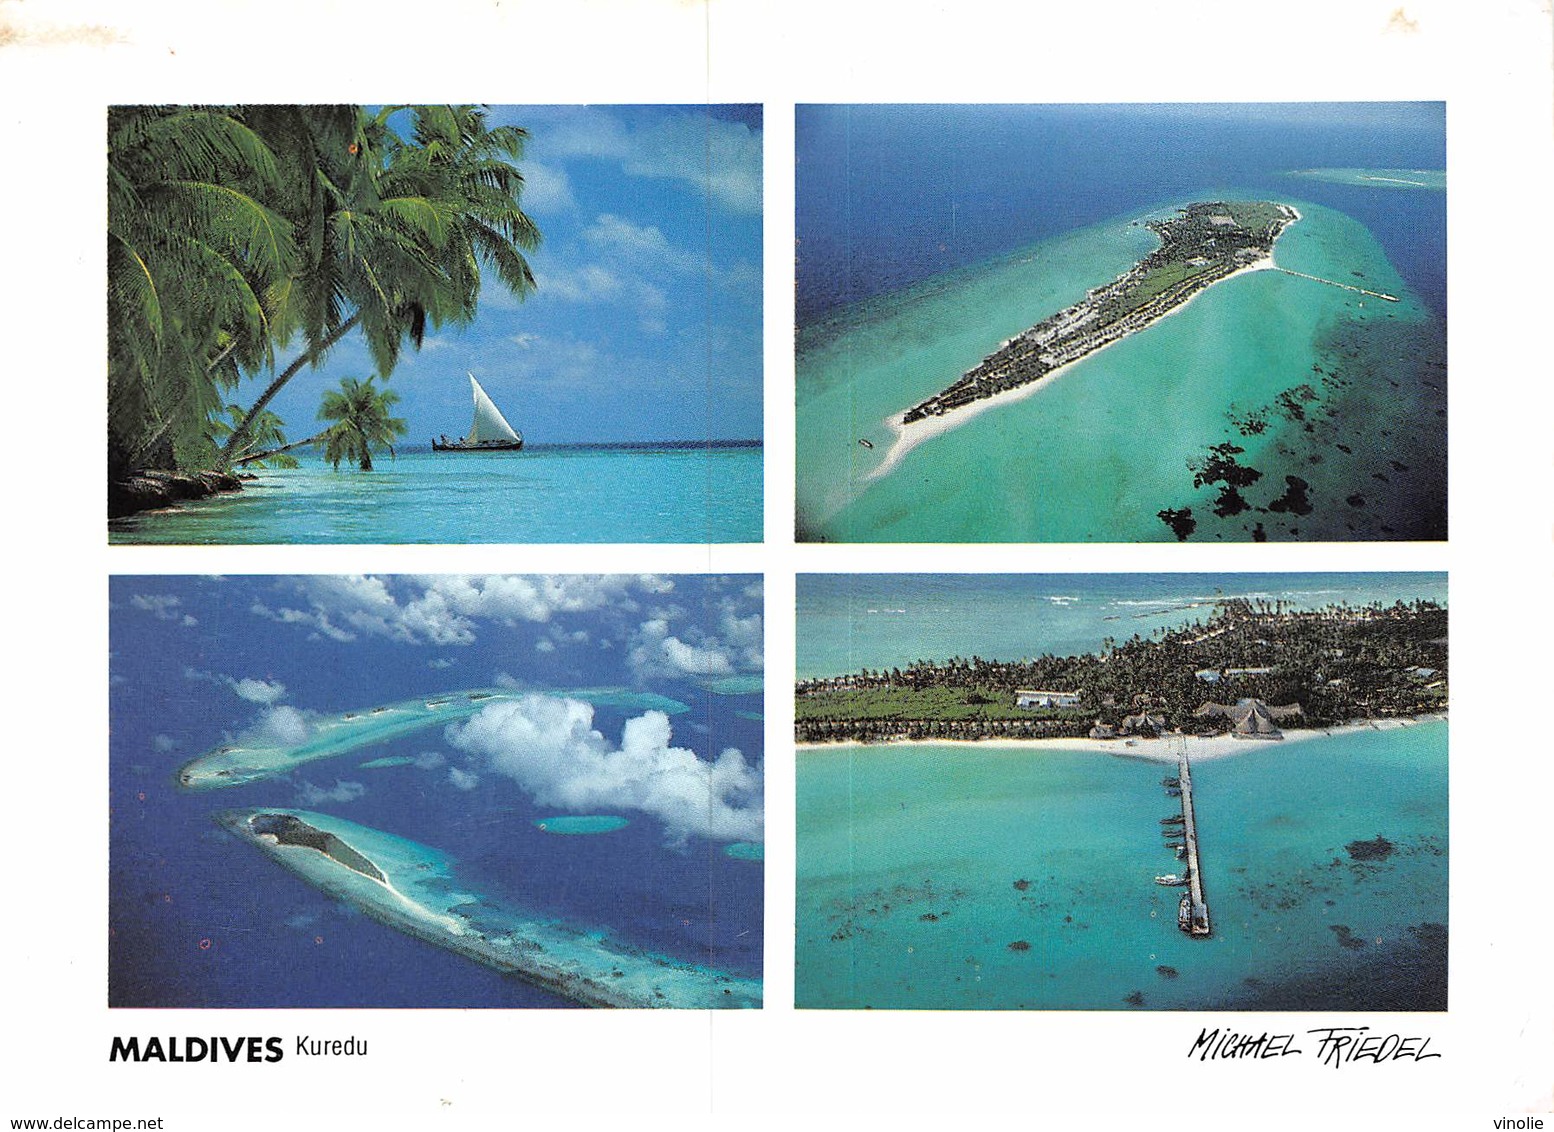 PIE-JmT-19-1605: MALDIVES. - Maldive